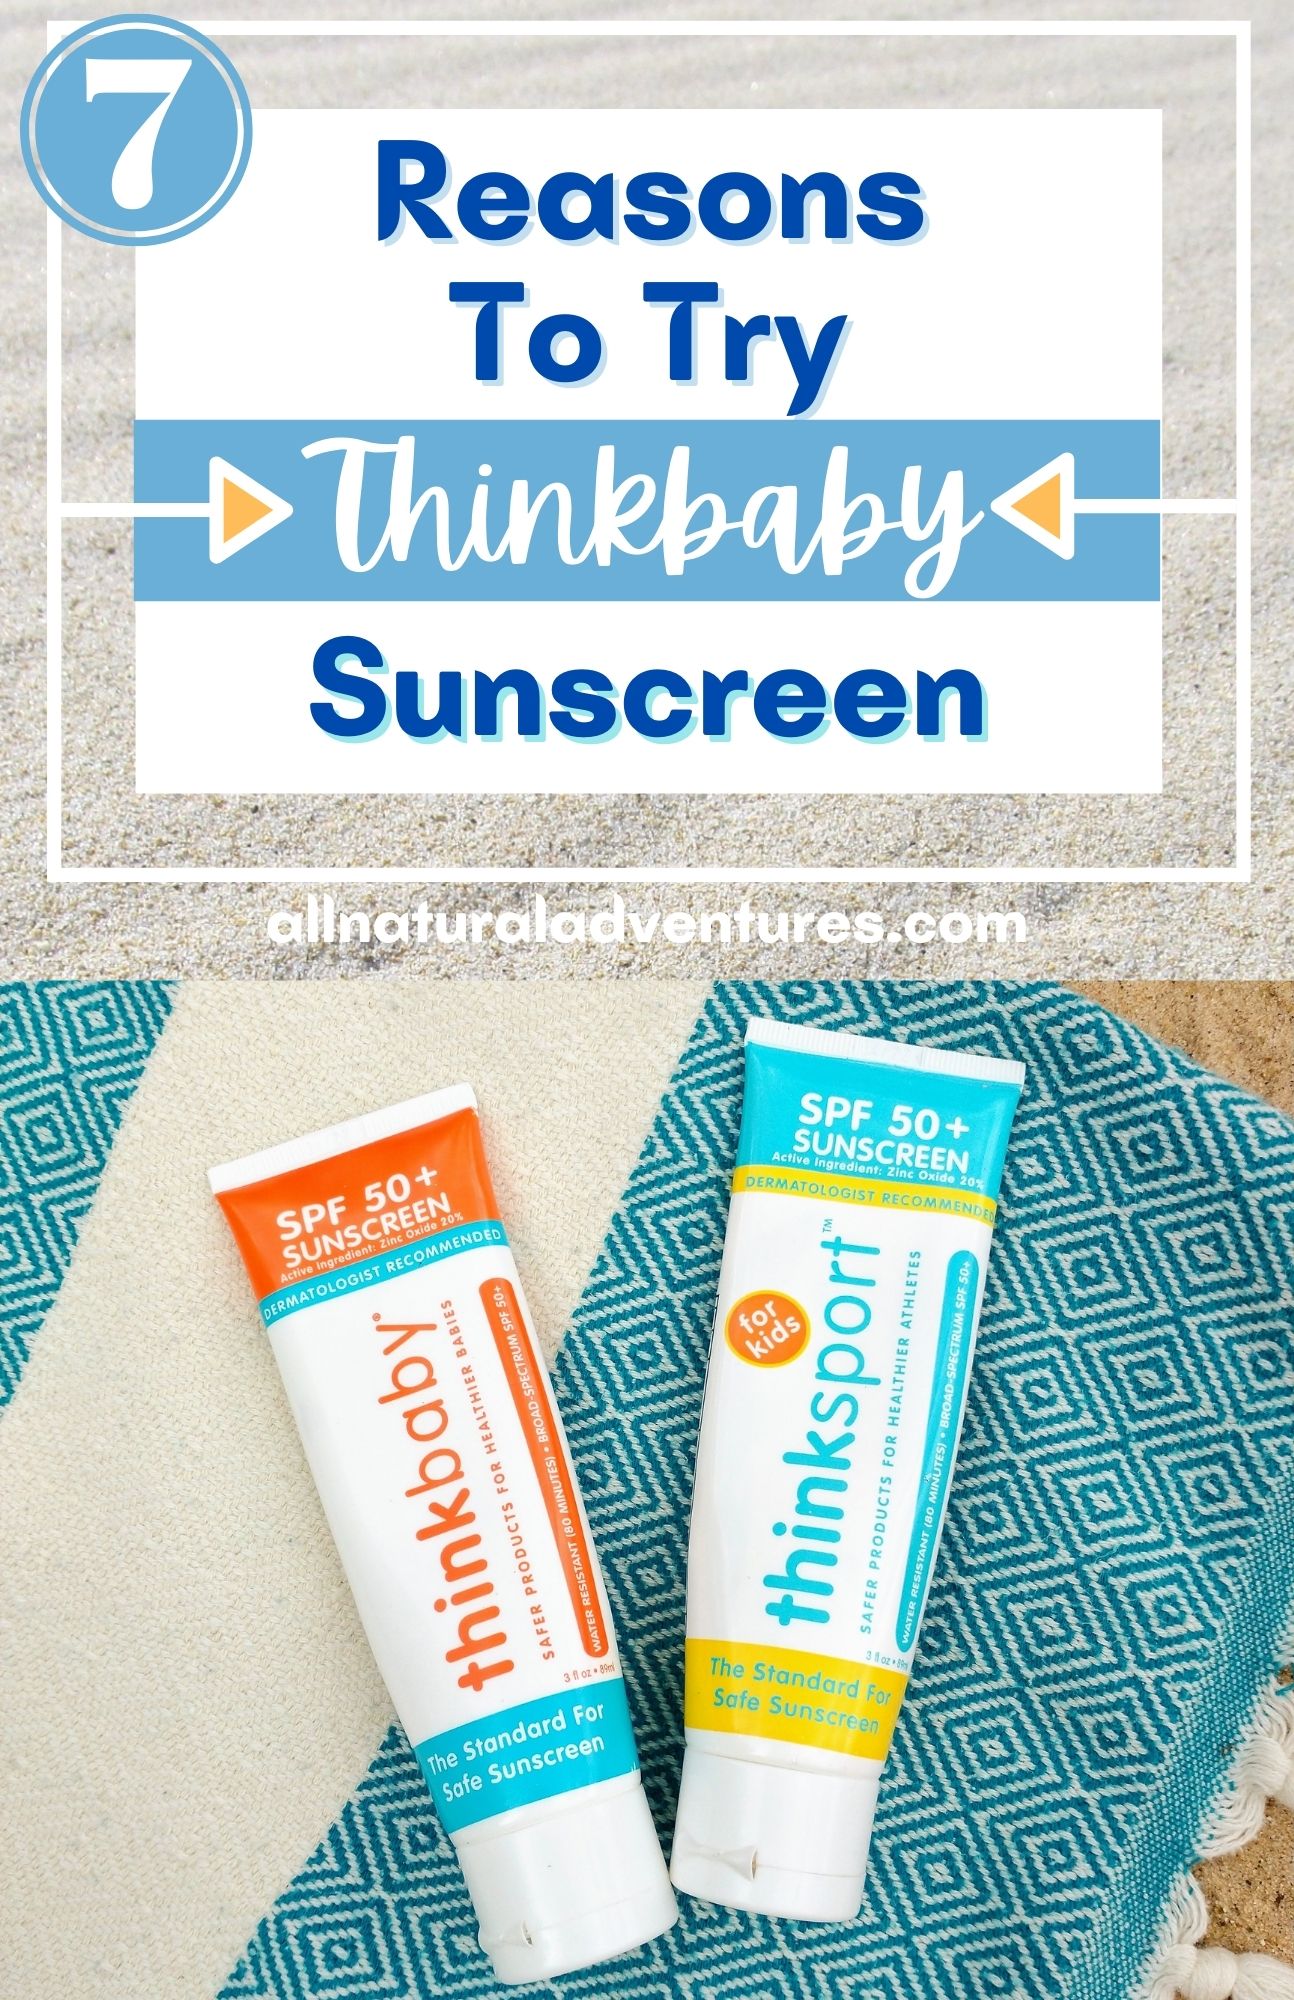 youtube thinkbaby sunscreen